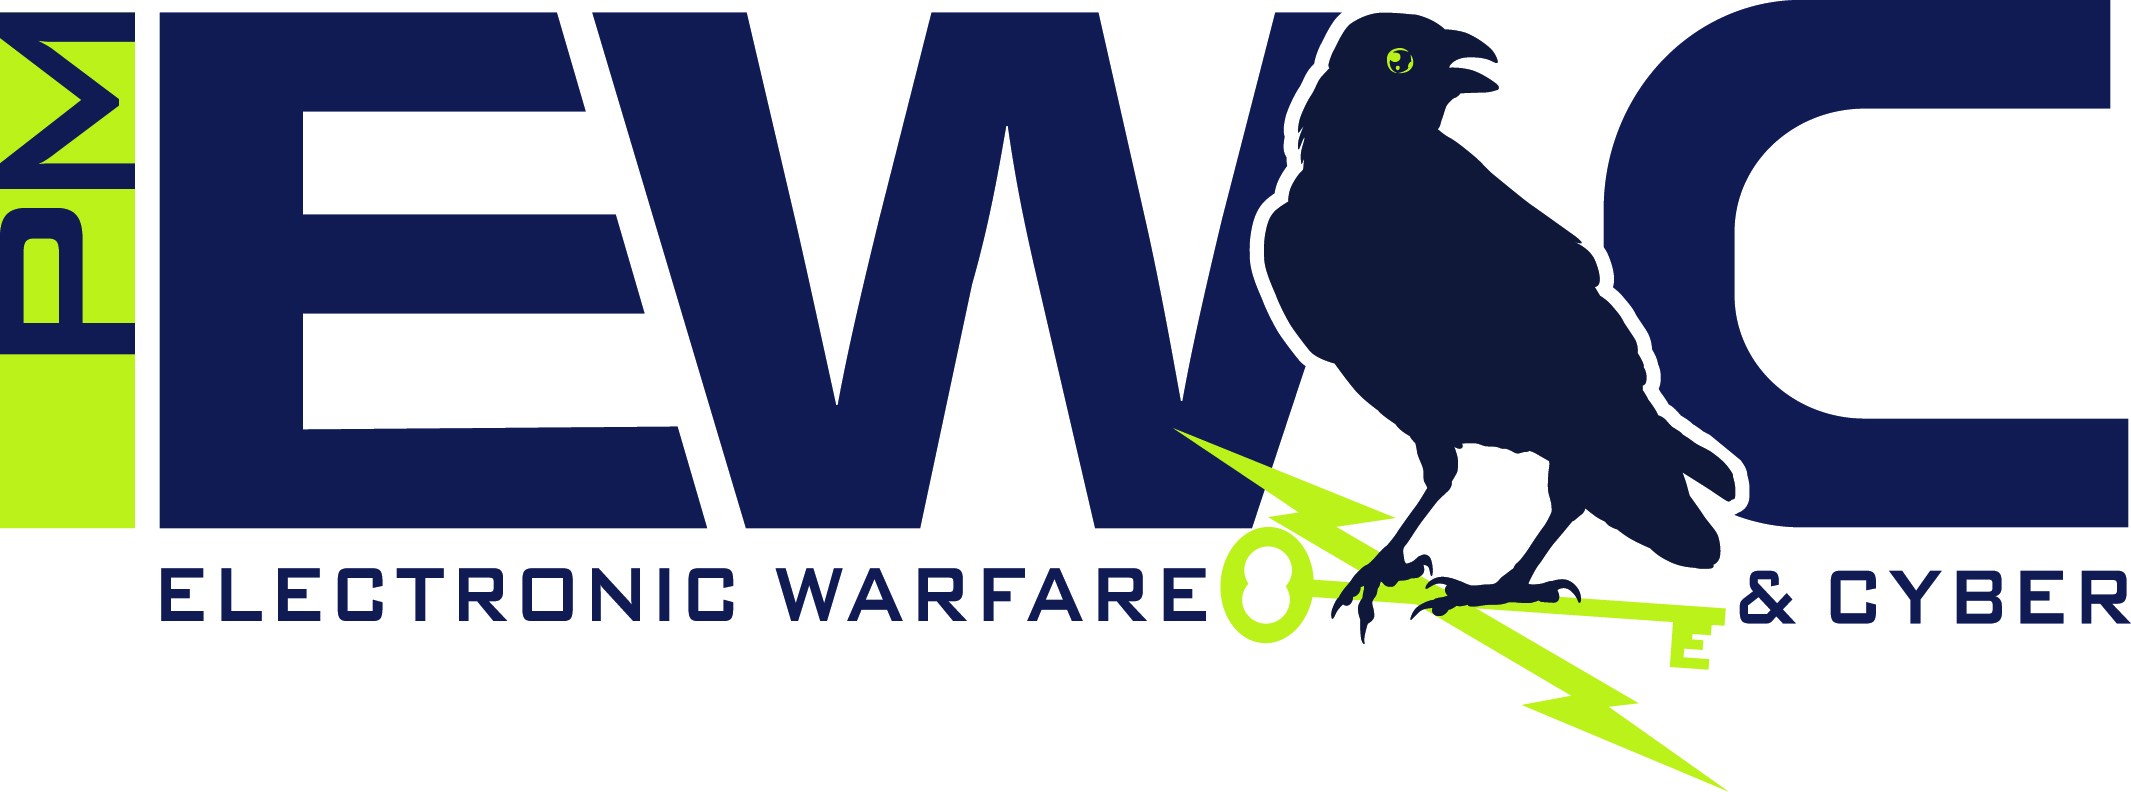 Electronic Warfare and Cyber logo